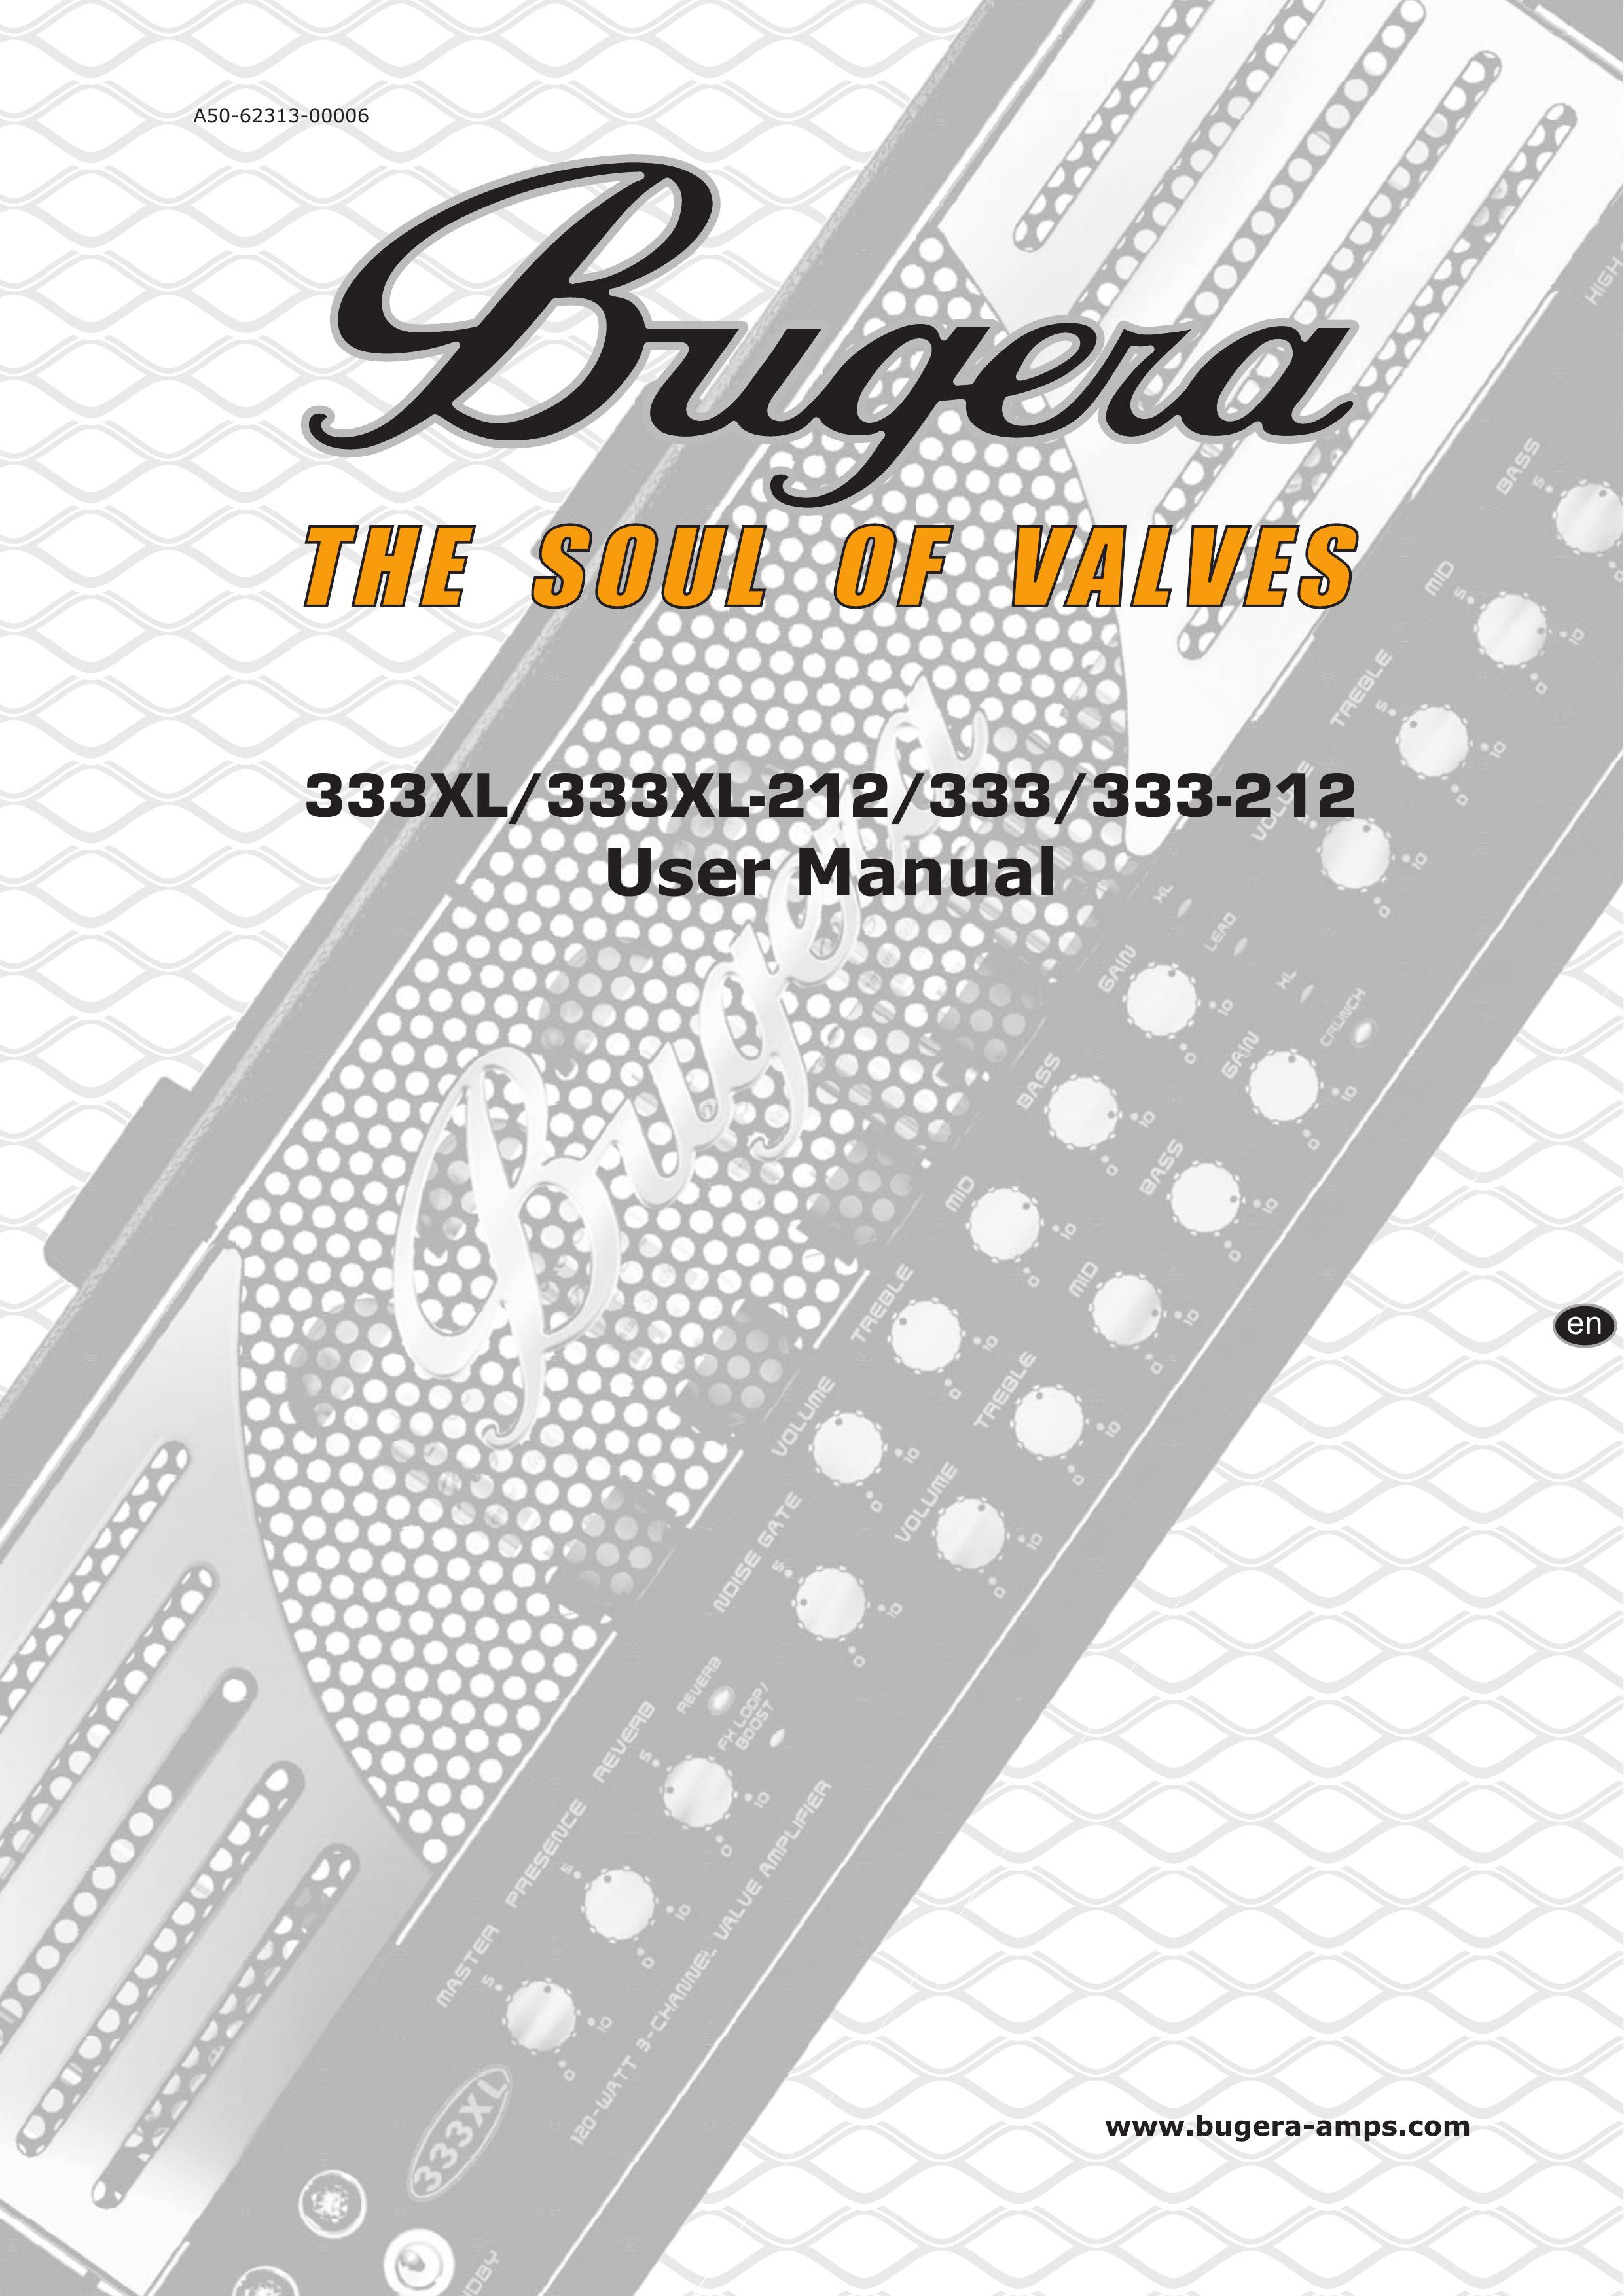 Behringer 333XL-212 Musical Instrument Amplifier User Manual